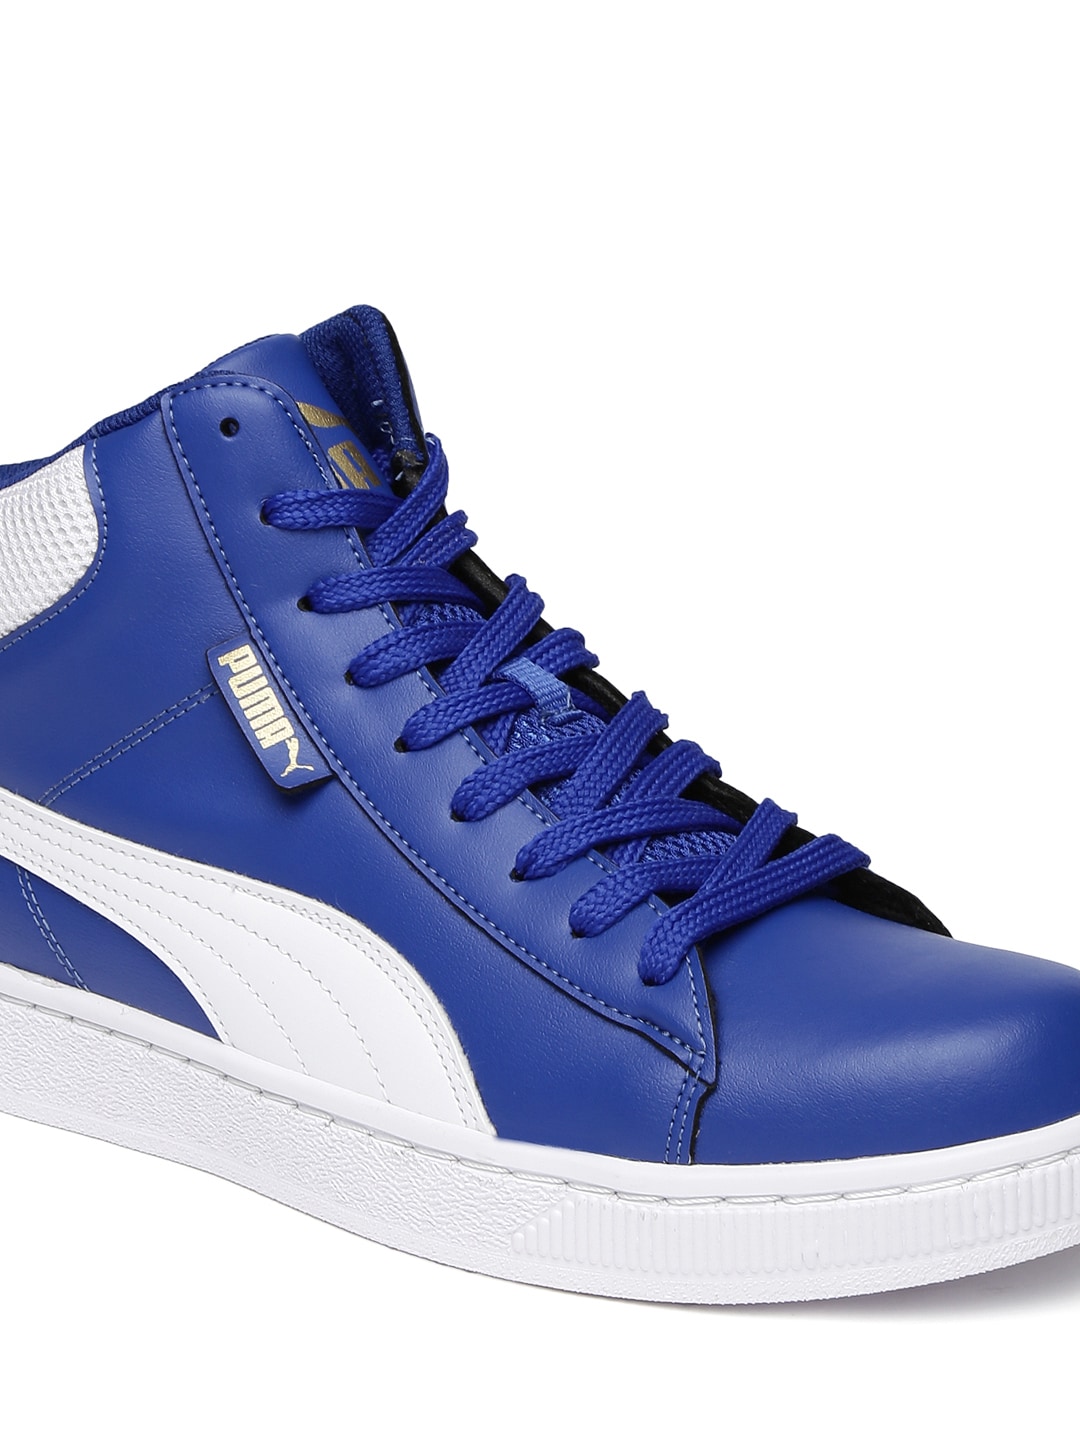 puma ferrari shoes men blue Sale,up to 